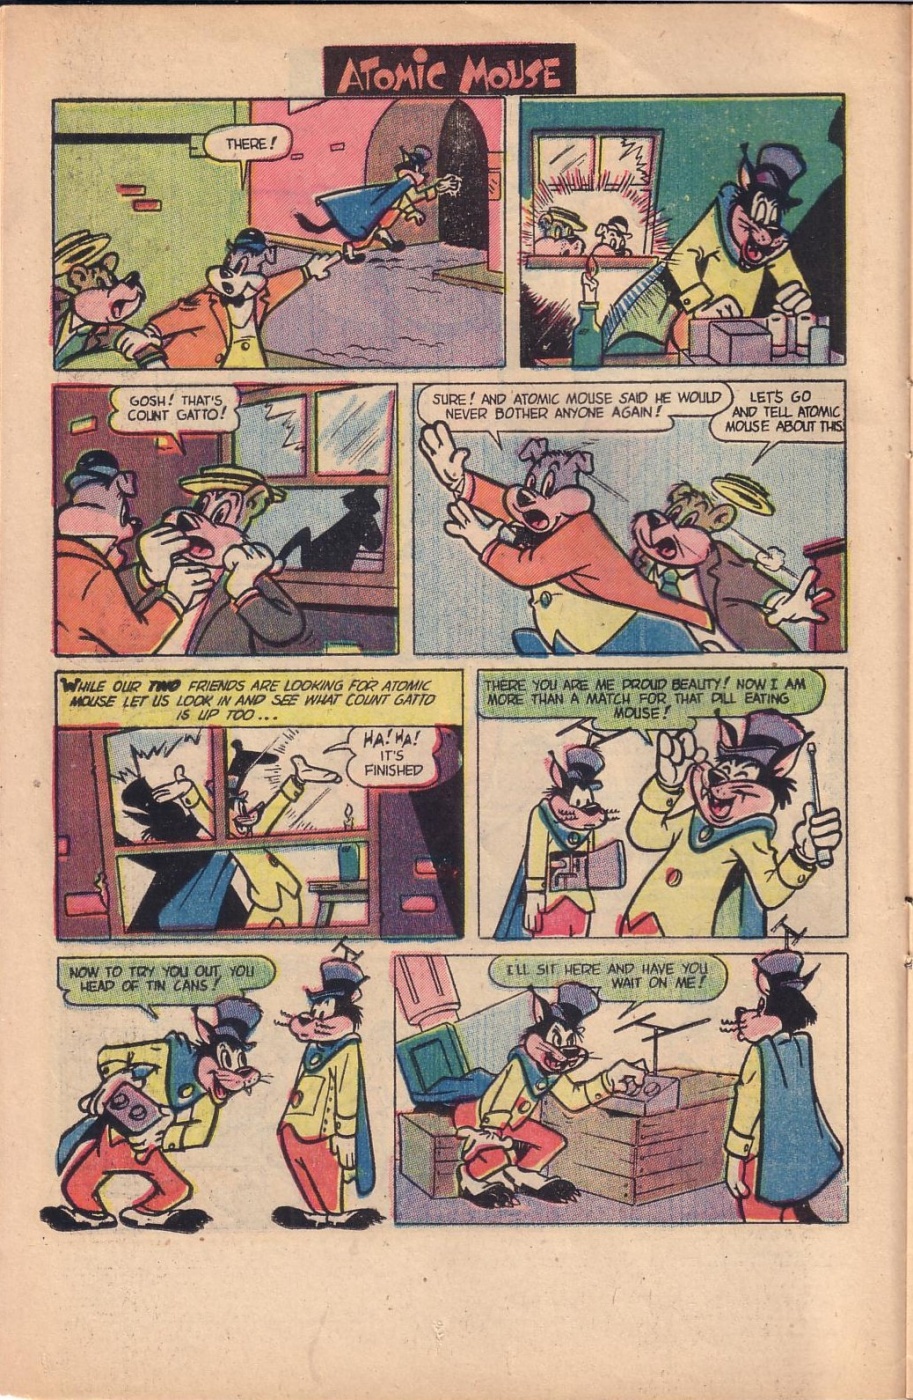 Atomic Mouse Comics - Funny Comics (12)